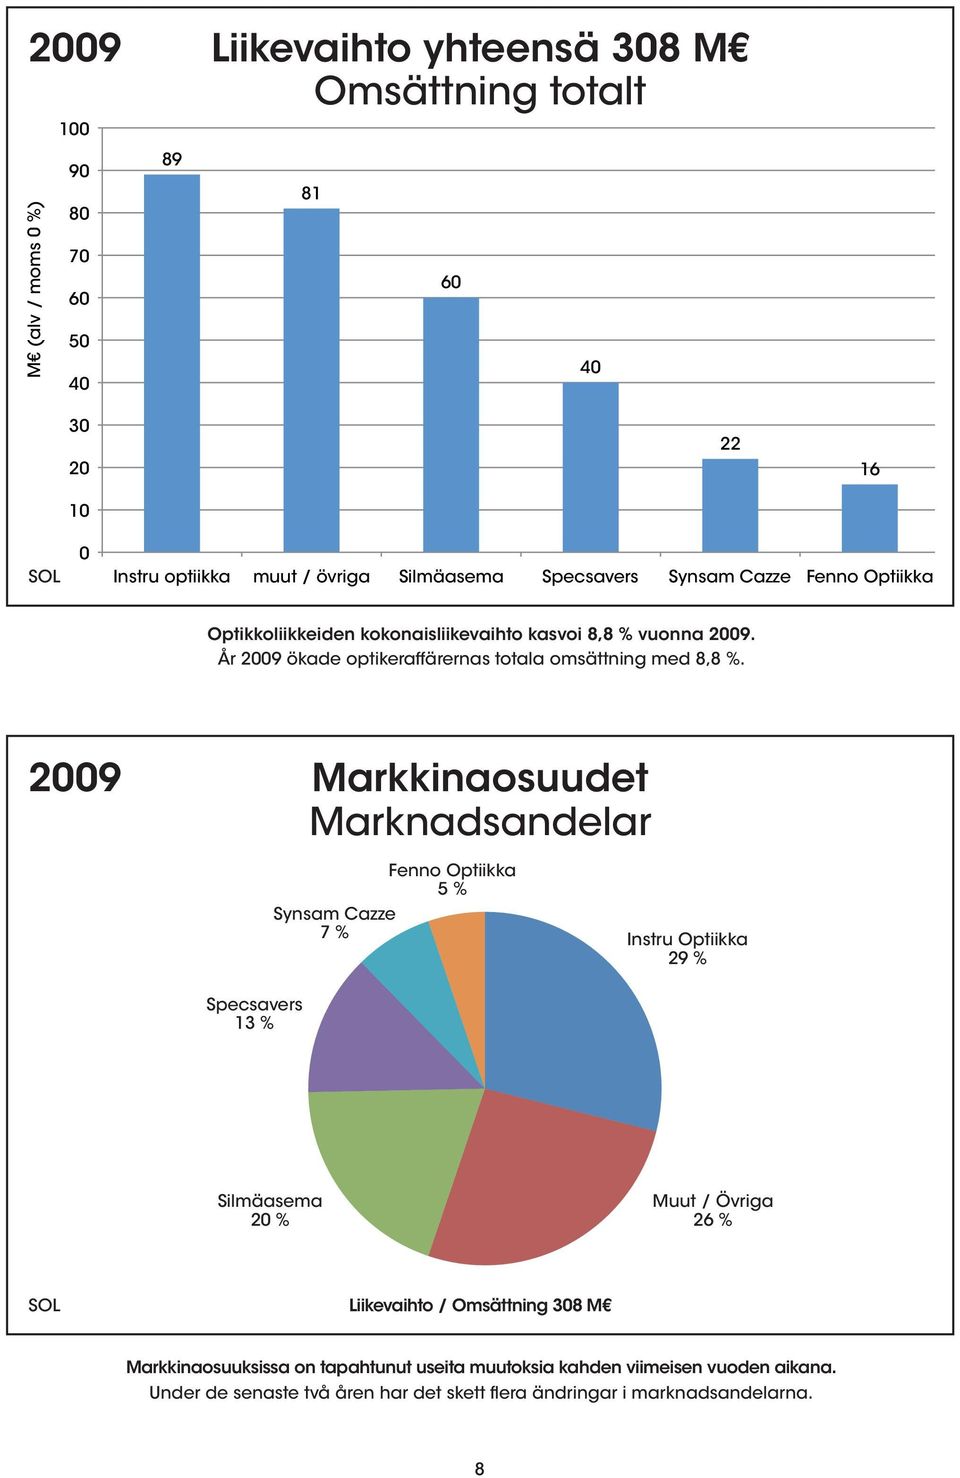 2009 2009 MARKKINAOSUUDET DISTRIBUTION Markkinaosuudet OF MARKET Marknadsandelar SHARES Fenno Fenno Optiikka Optiikka 5 % 5 % Synsam Cazze Synsam Cazze 7 % 7 % Instru Optiikka 29 % Specsavers